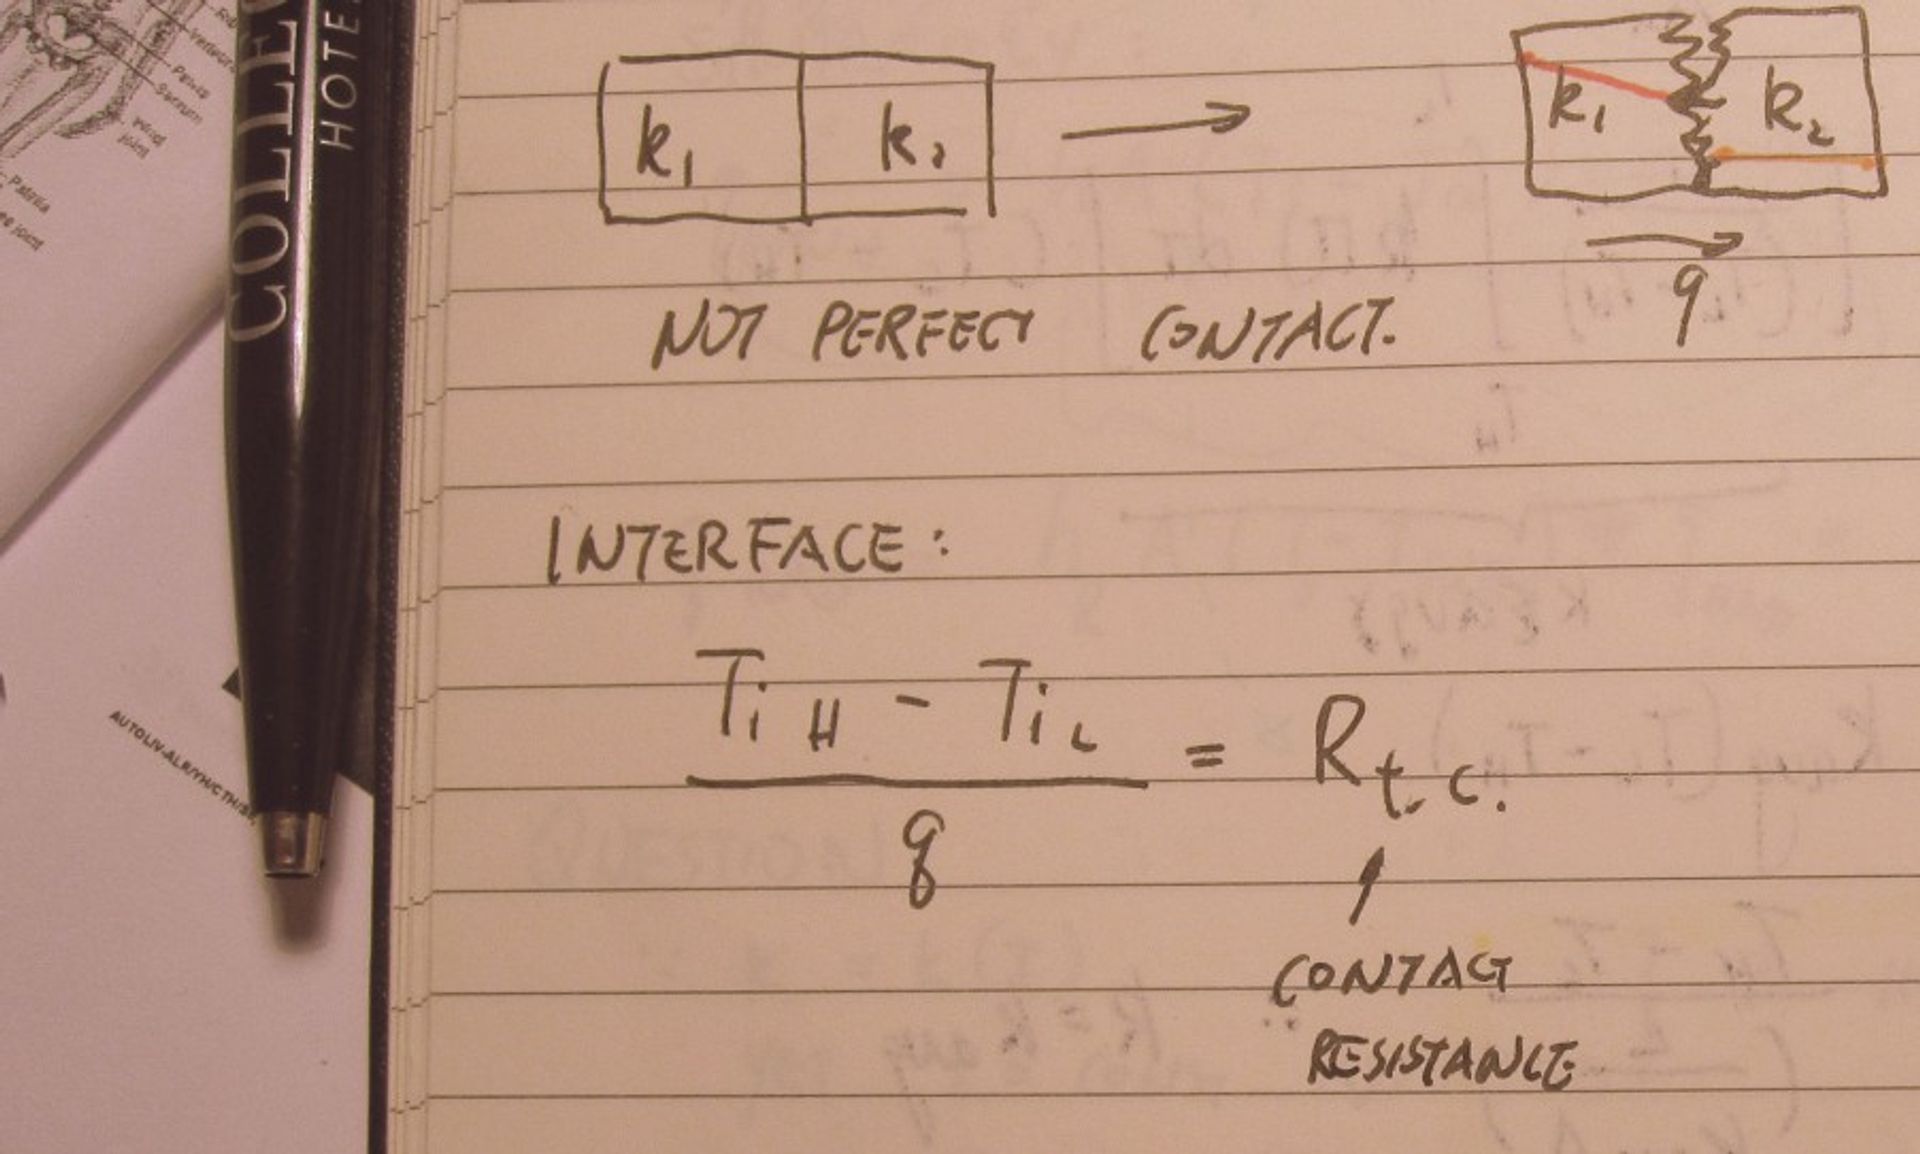 Handwritten formula for contact resistance.